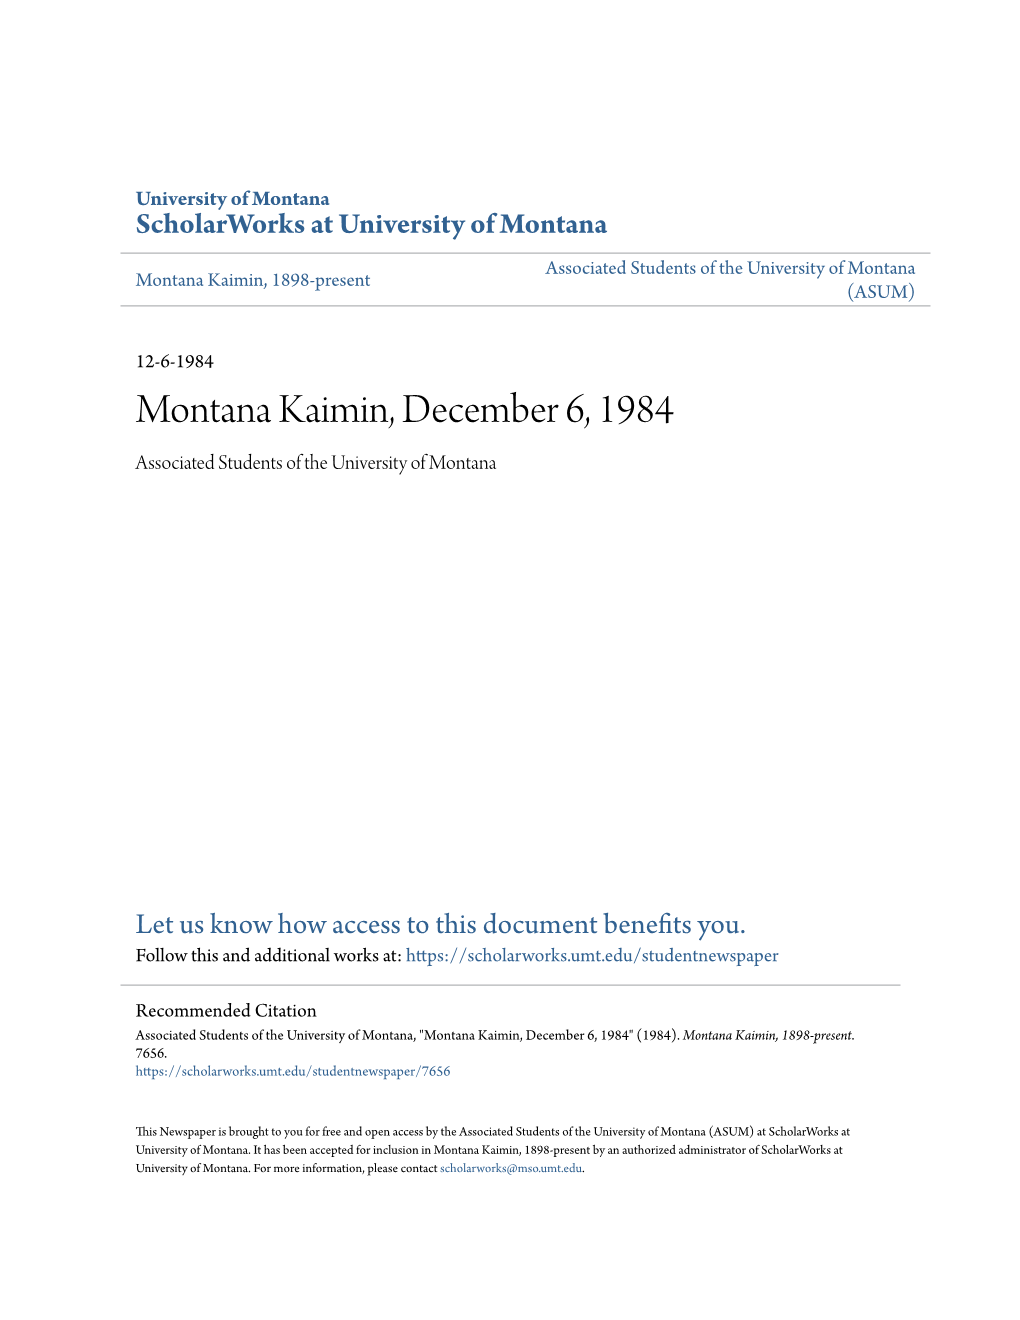 Montana Kaimin, December 6, 1984 Associated Students of the University of Montana